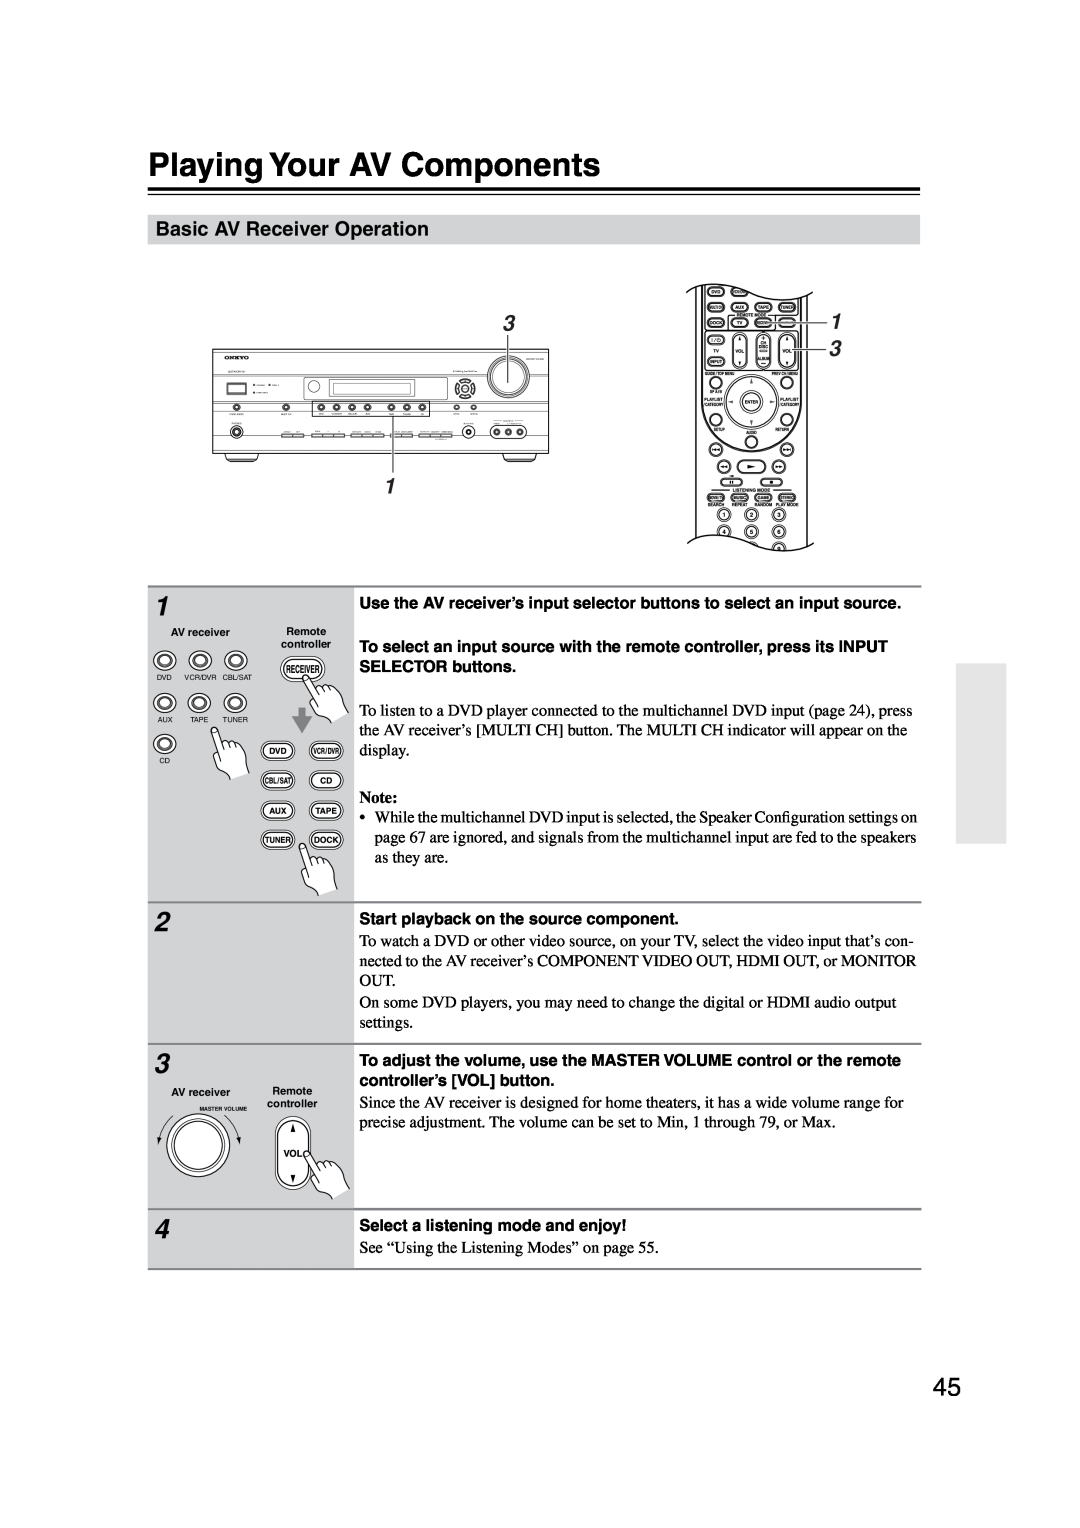 Onkyo TX-SR576, TX-SR506 instruction manual Playing Your AV Components, Basic AV Receiver Operation 